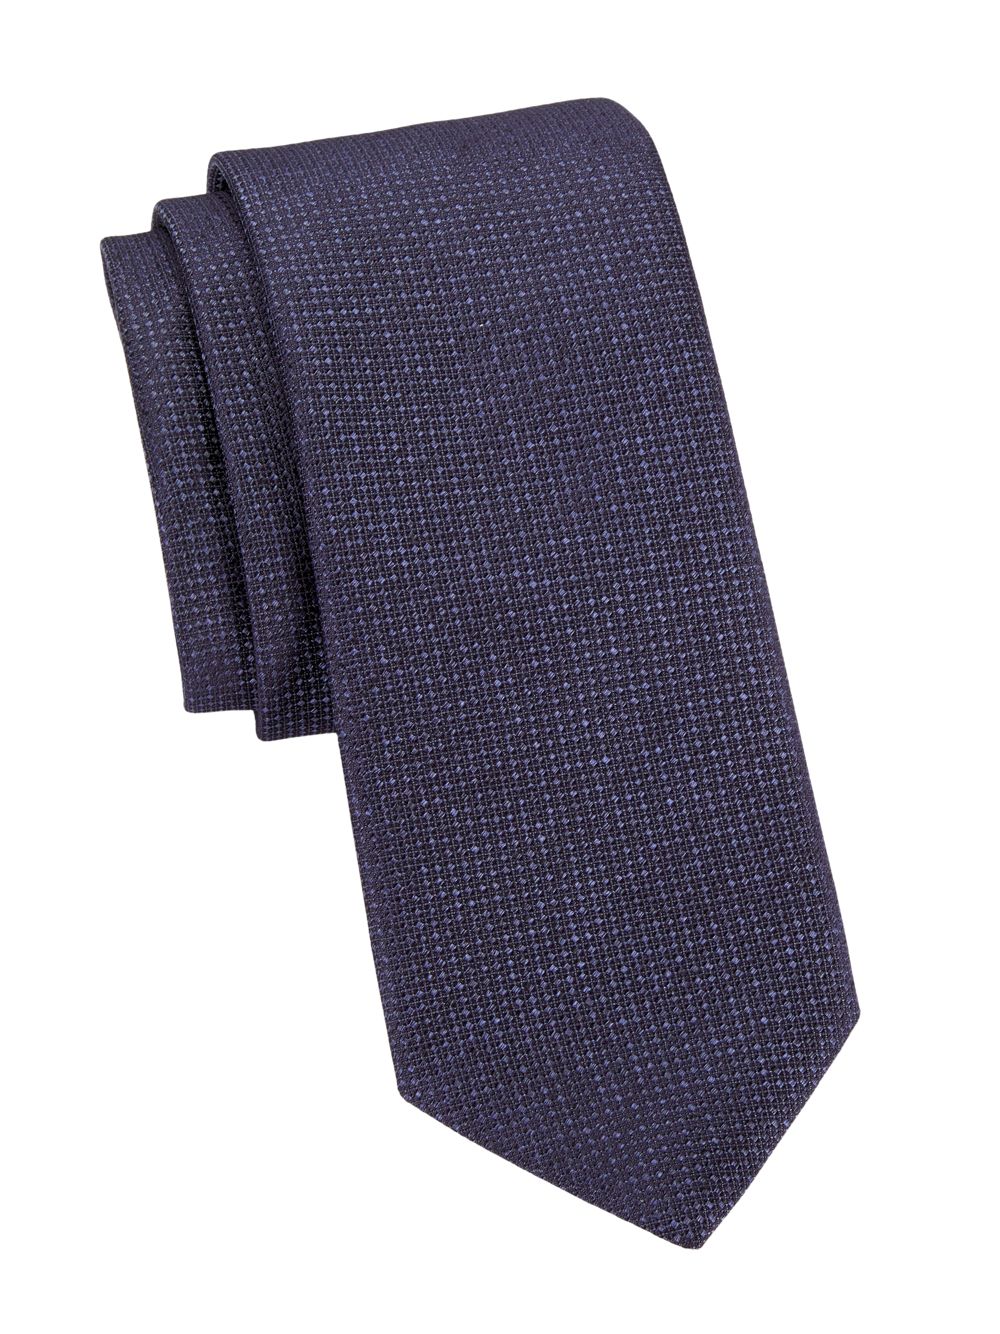 Шелковый галстук Microneat Canali, синий